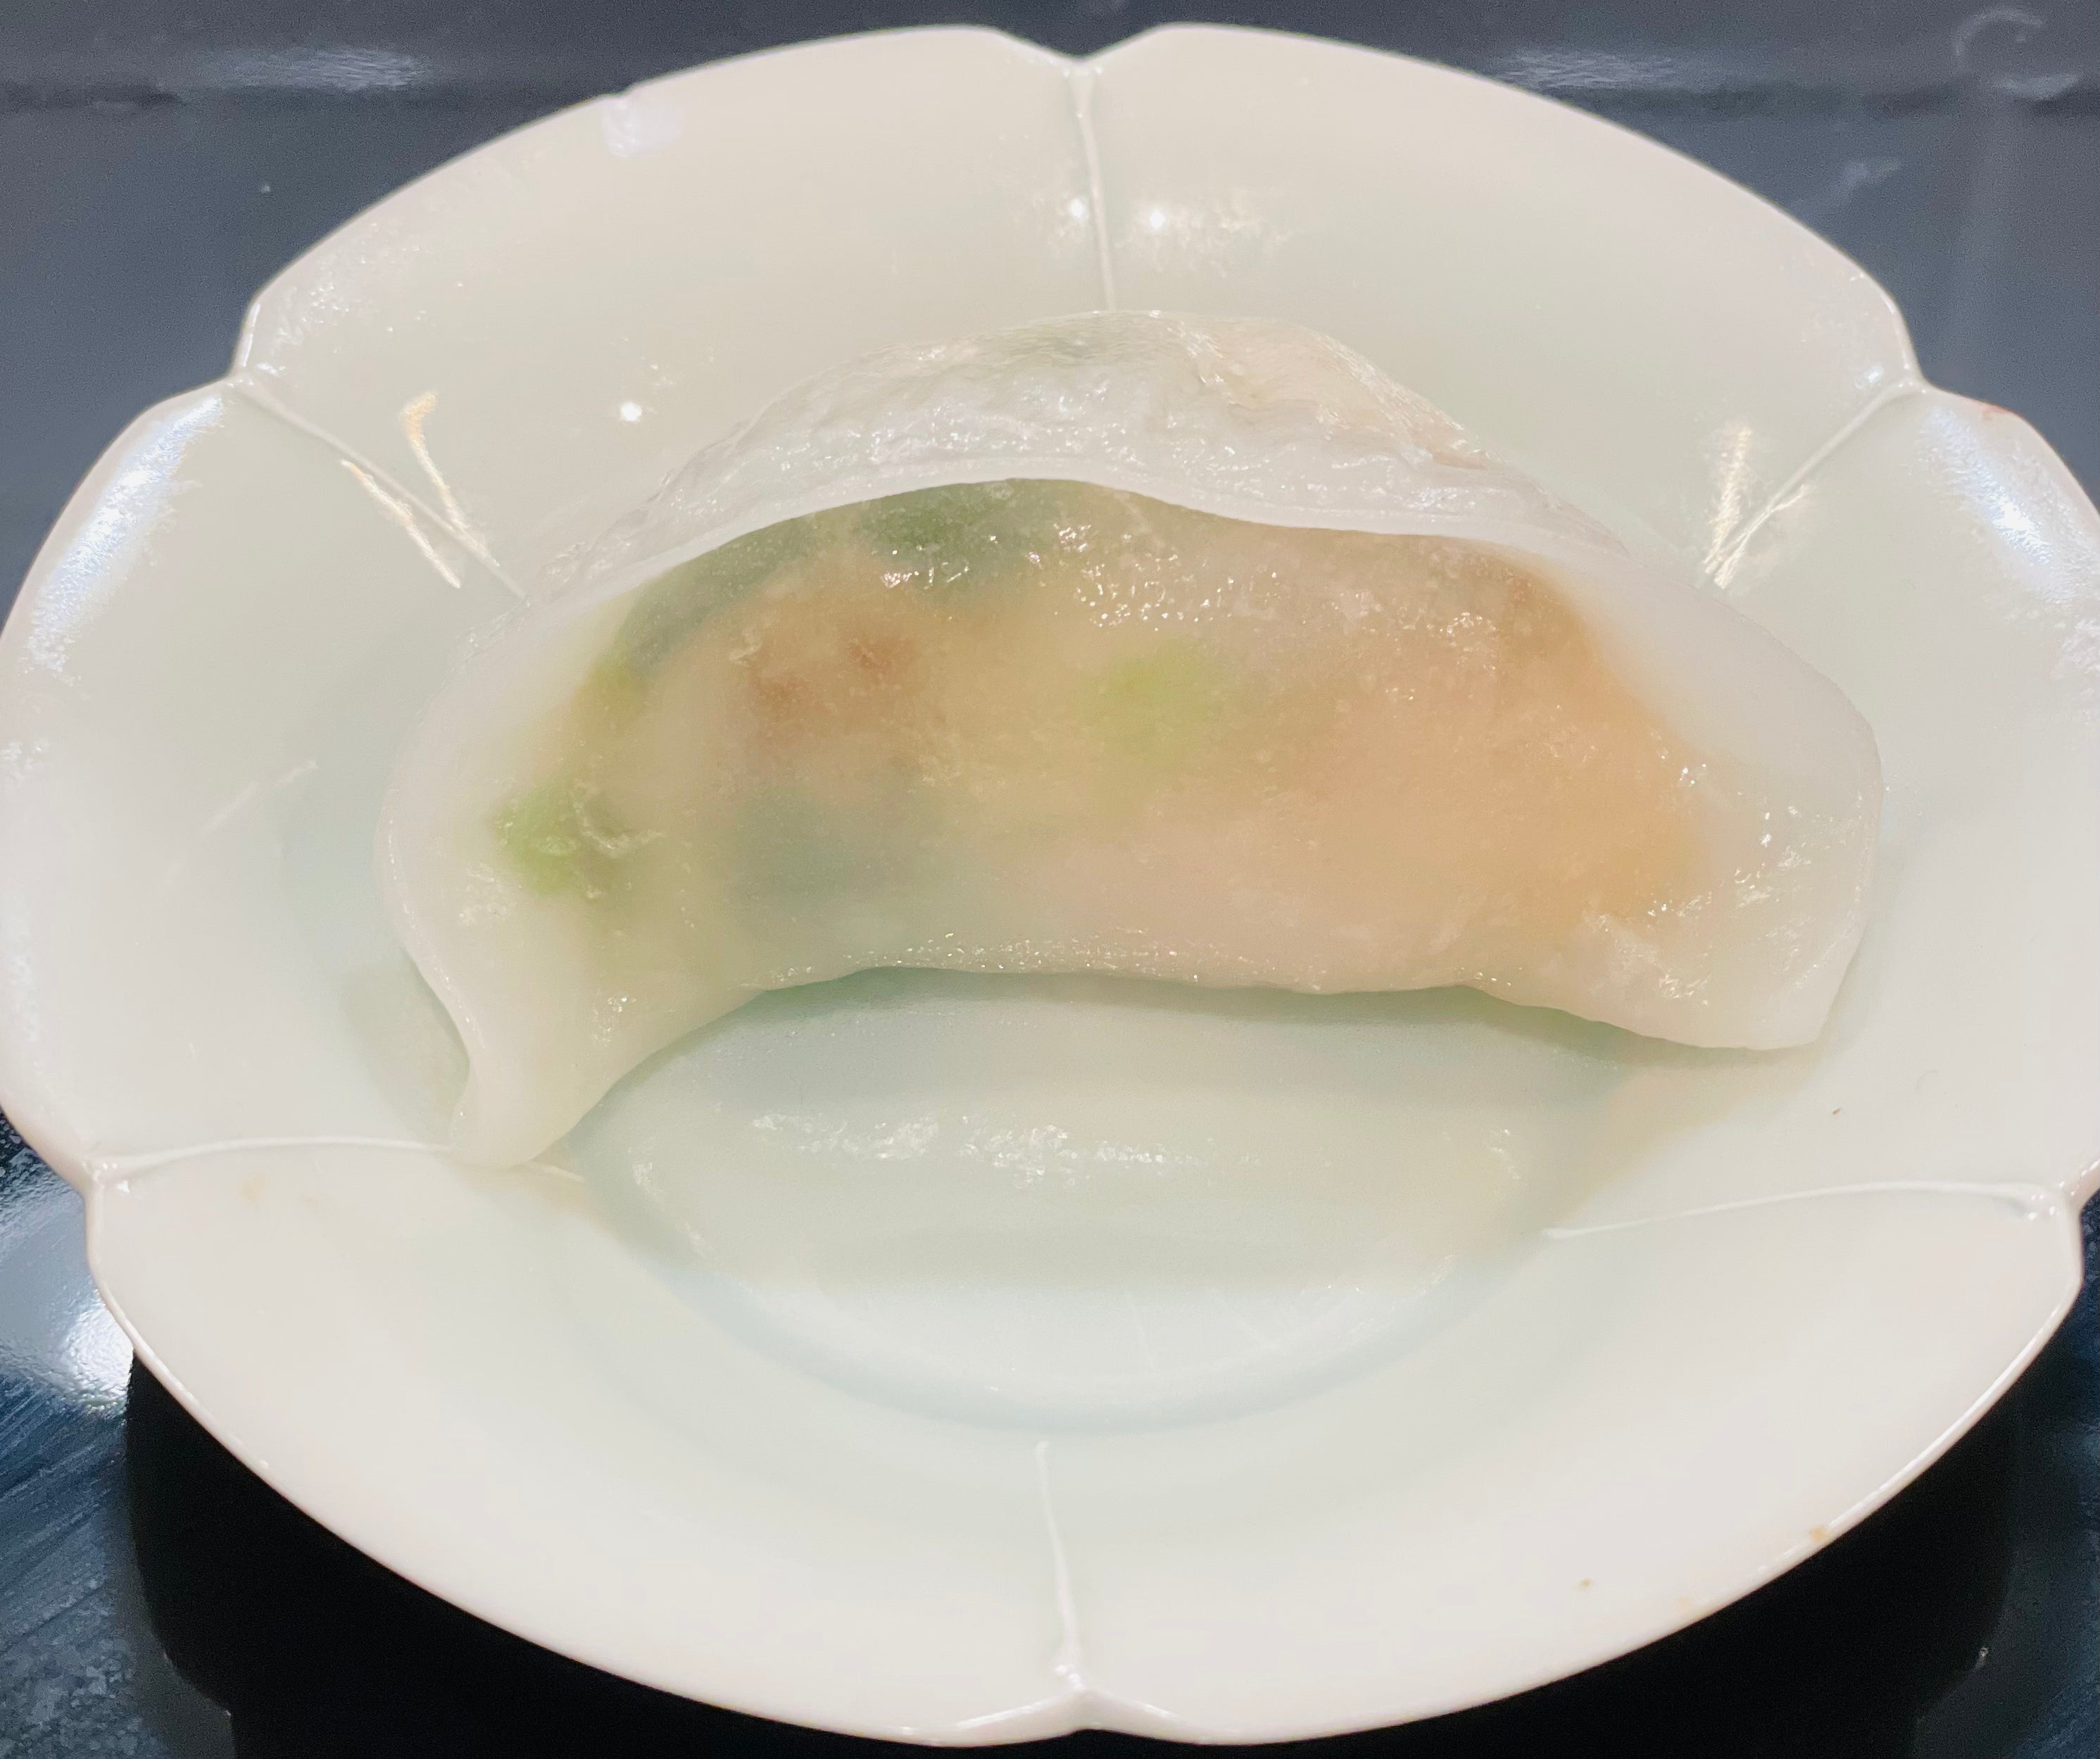 Crystal Prawn and Chinese Leek Dumpling (4 pieces)